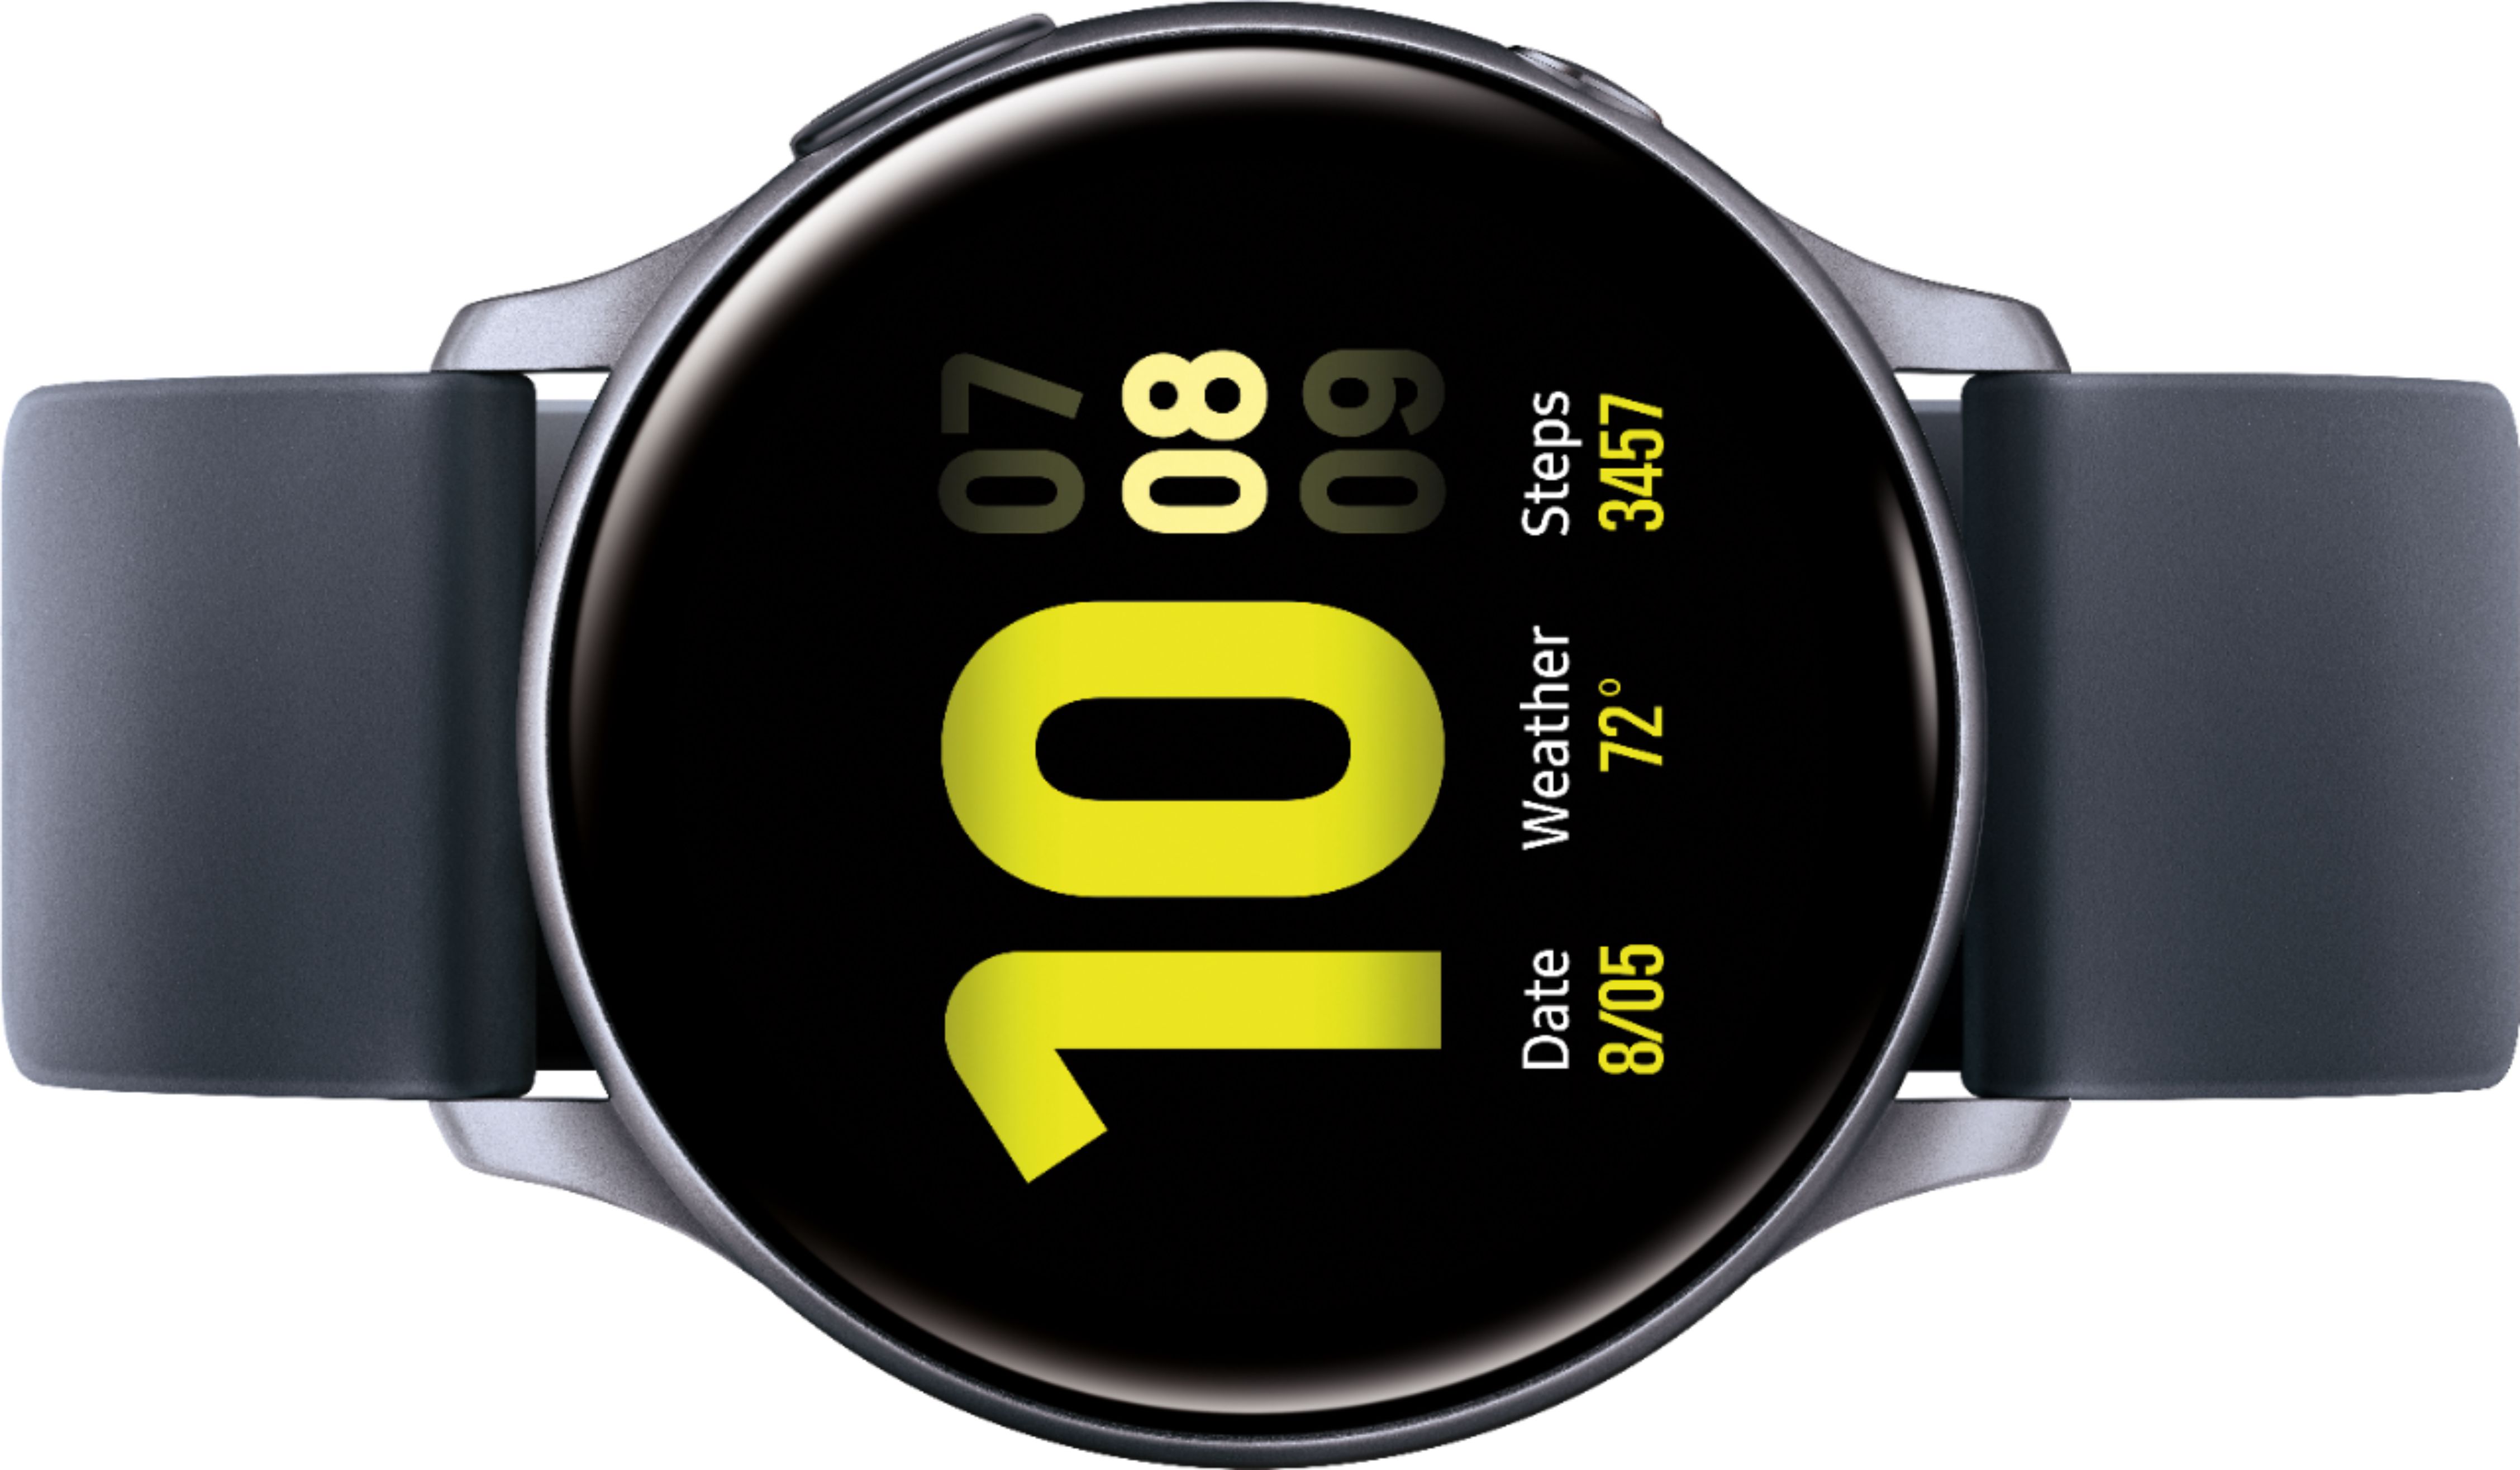 Best Buy: Samsung Galaxy Watch Active2 Smartwatch 40mm Aluminum Aqua Black  SM-R830NZKAXAR